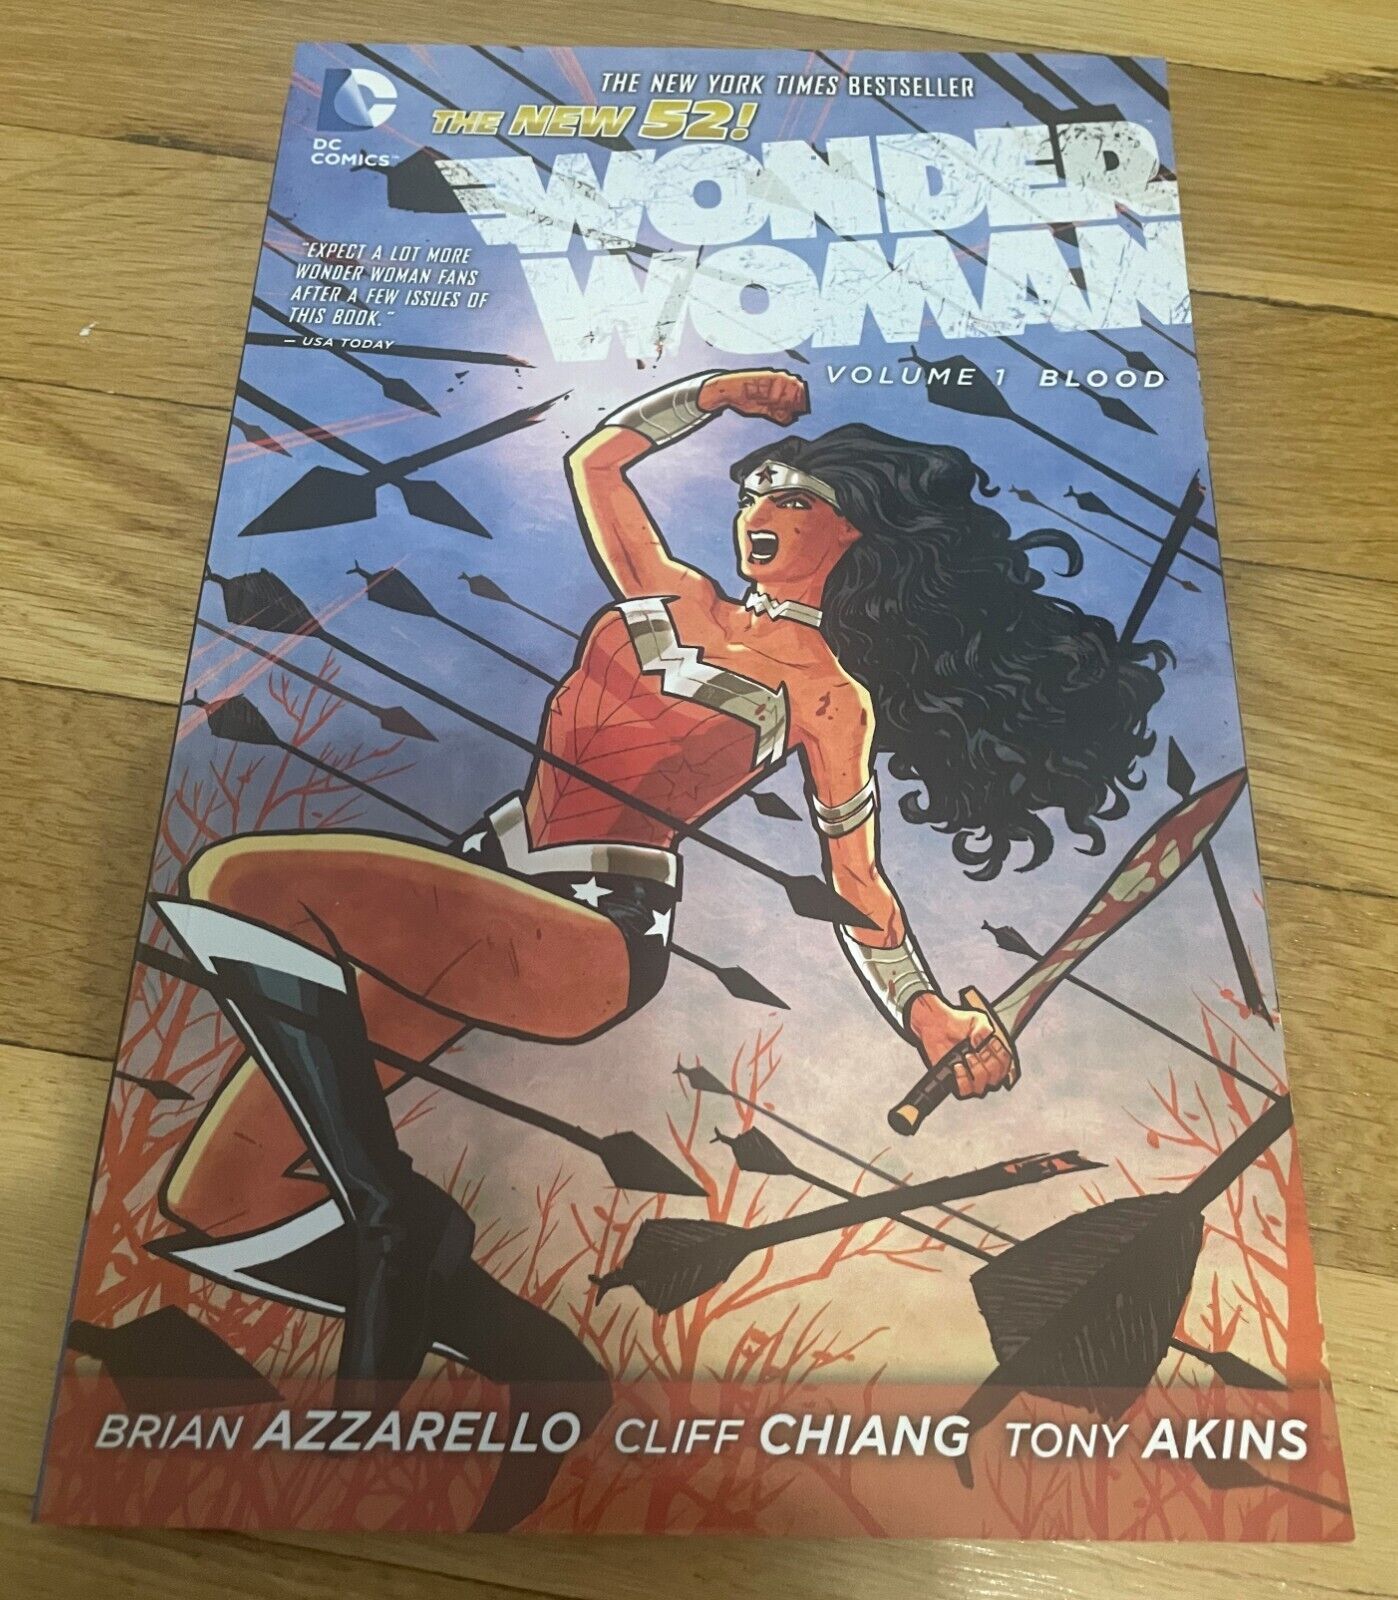 Wonder Woman Volume 1 Blood TPB Graphic Novel DC